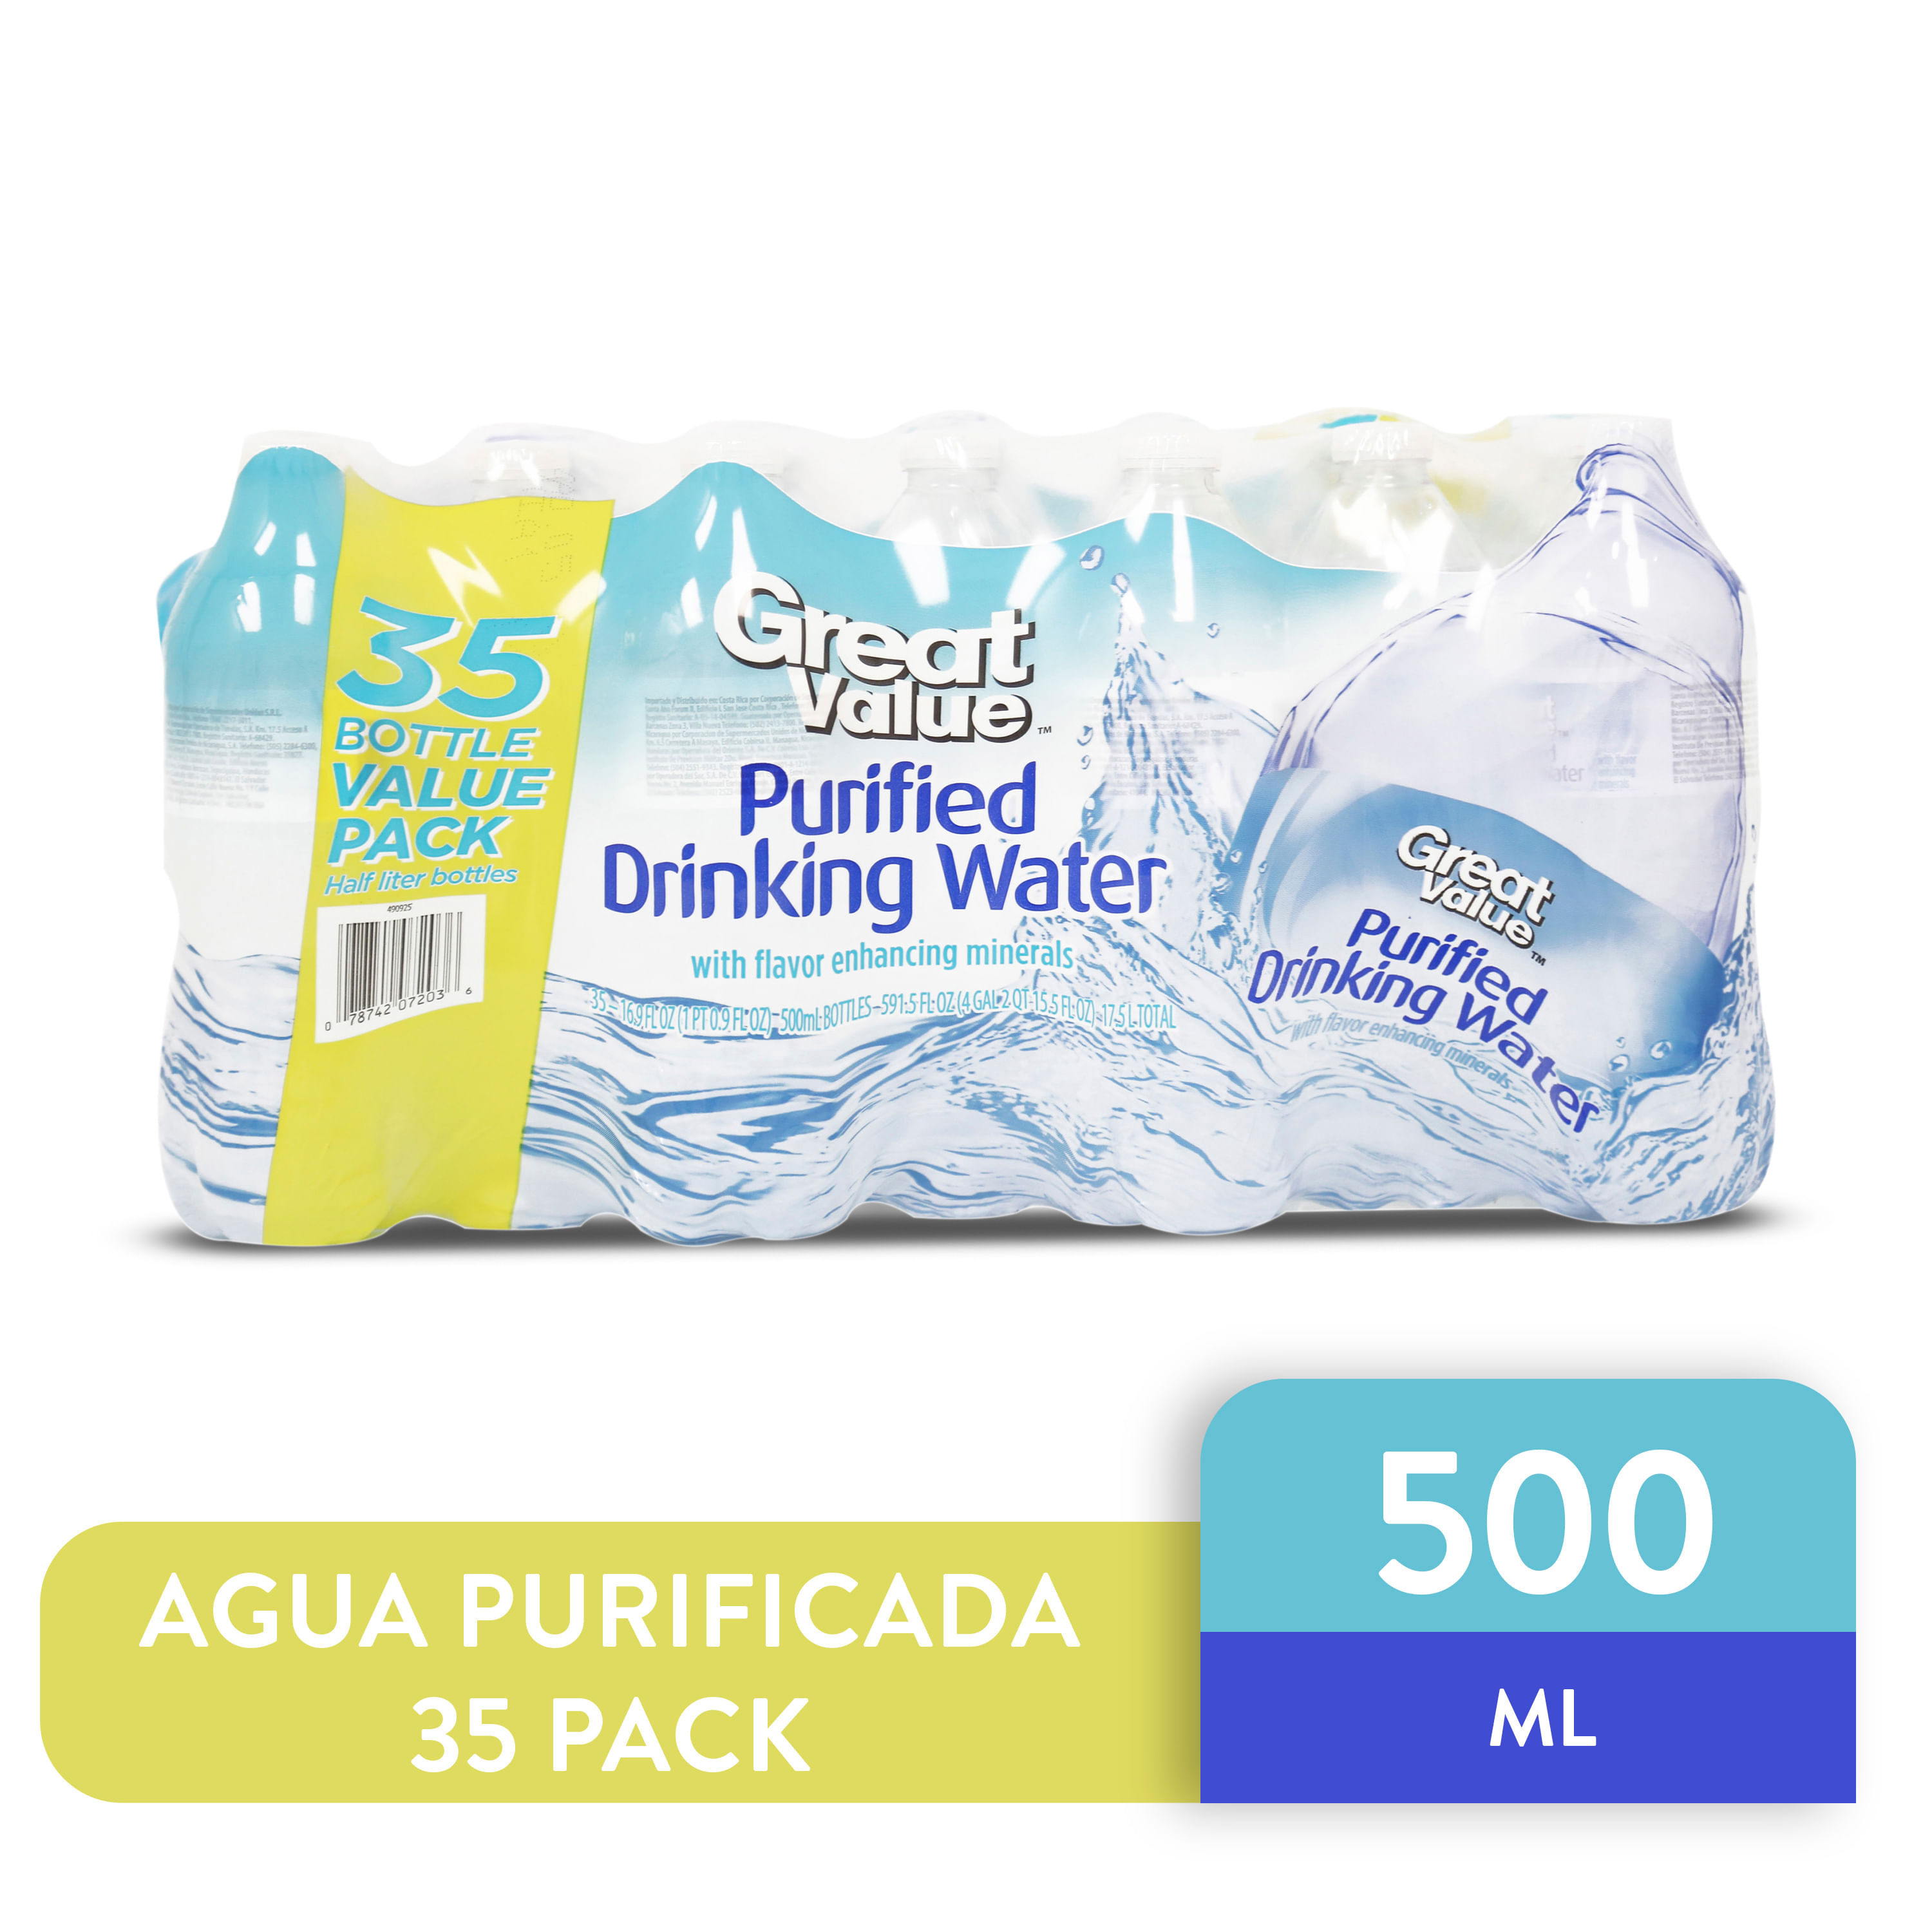 Agua-Purificada-Great-Value-35-Pack-500ml-1-30912